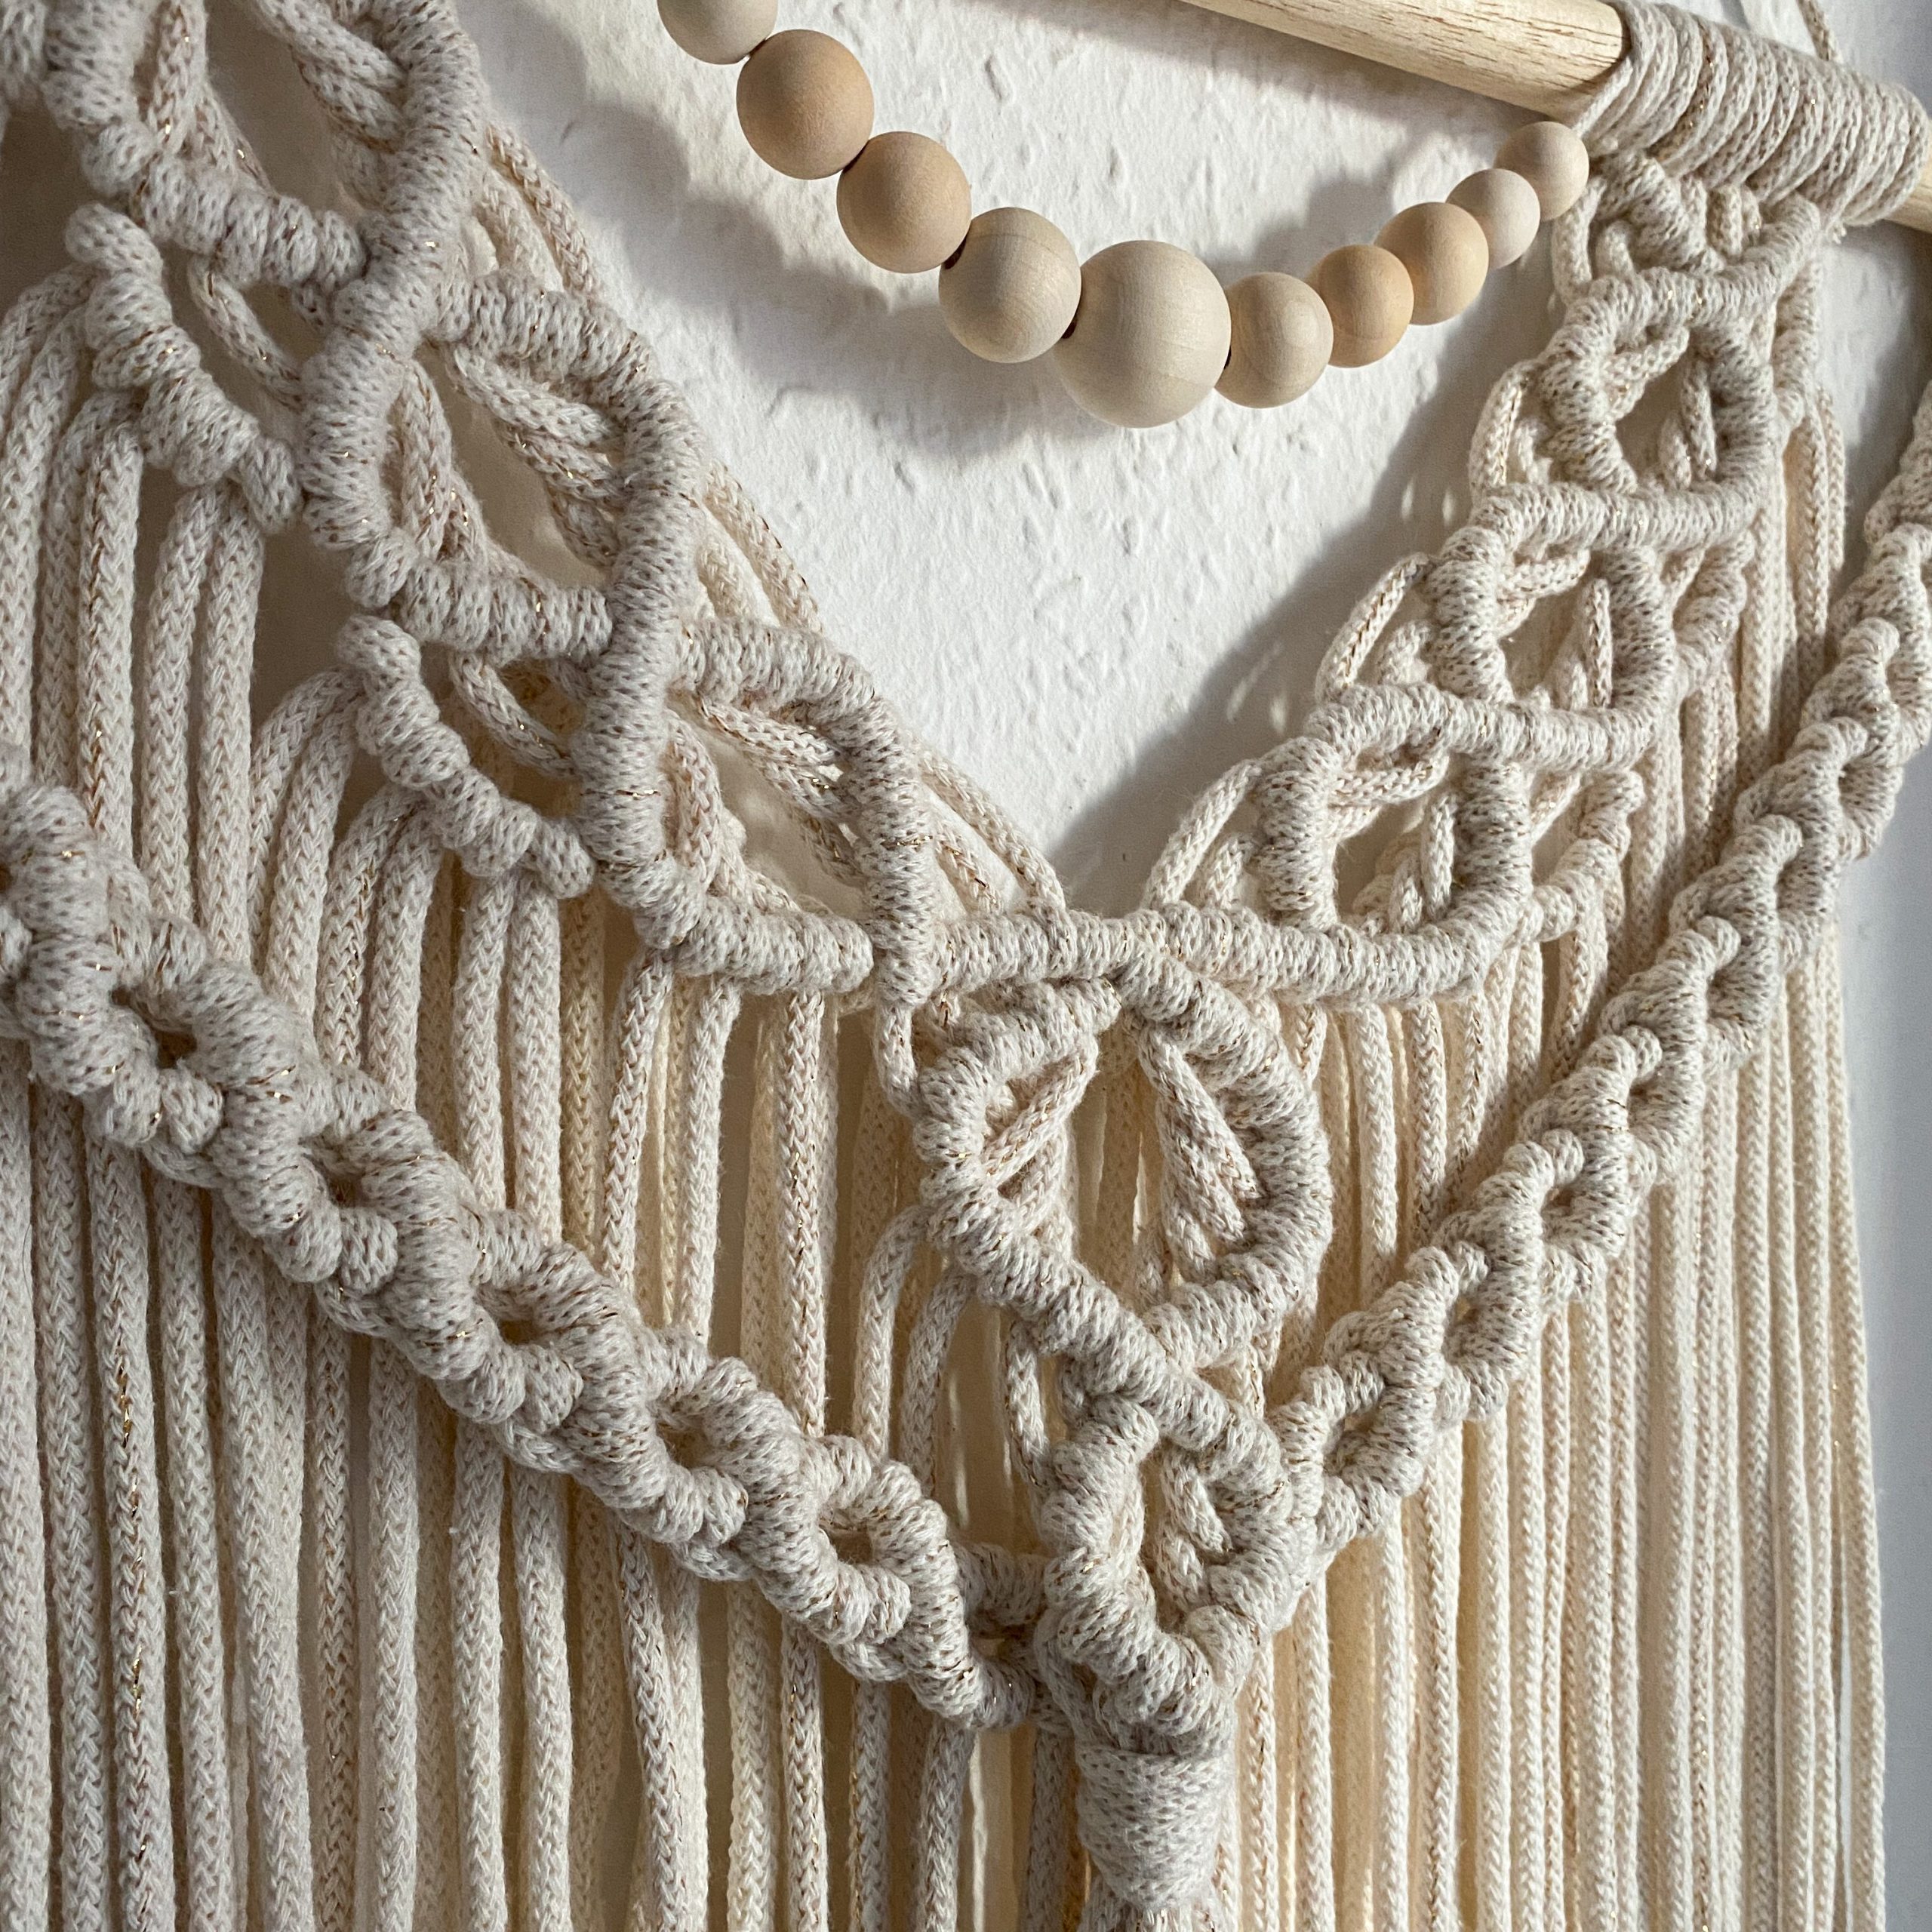 15 tapices de macramé listos para colgar en la pared  Macrame wall hanging  patterns, Macrame wall hanging, Wall weave